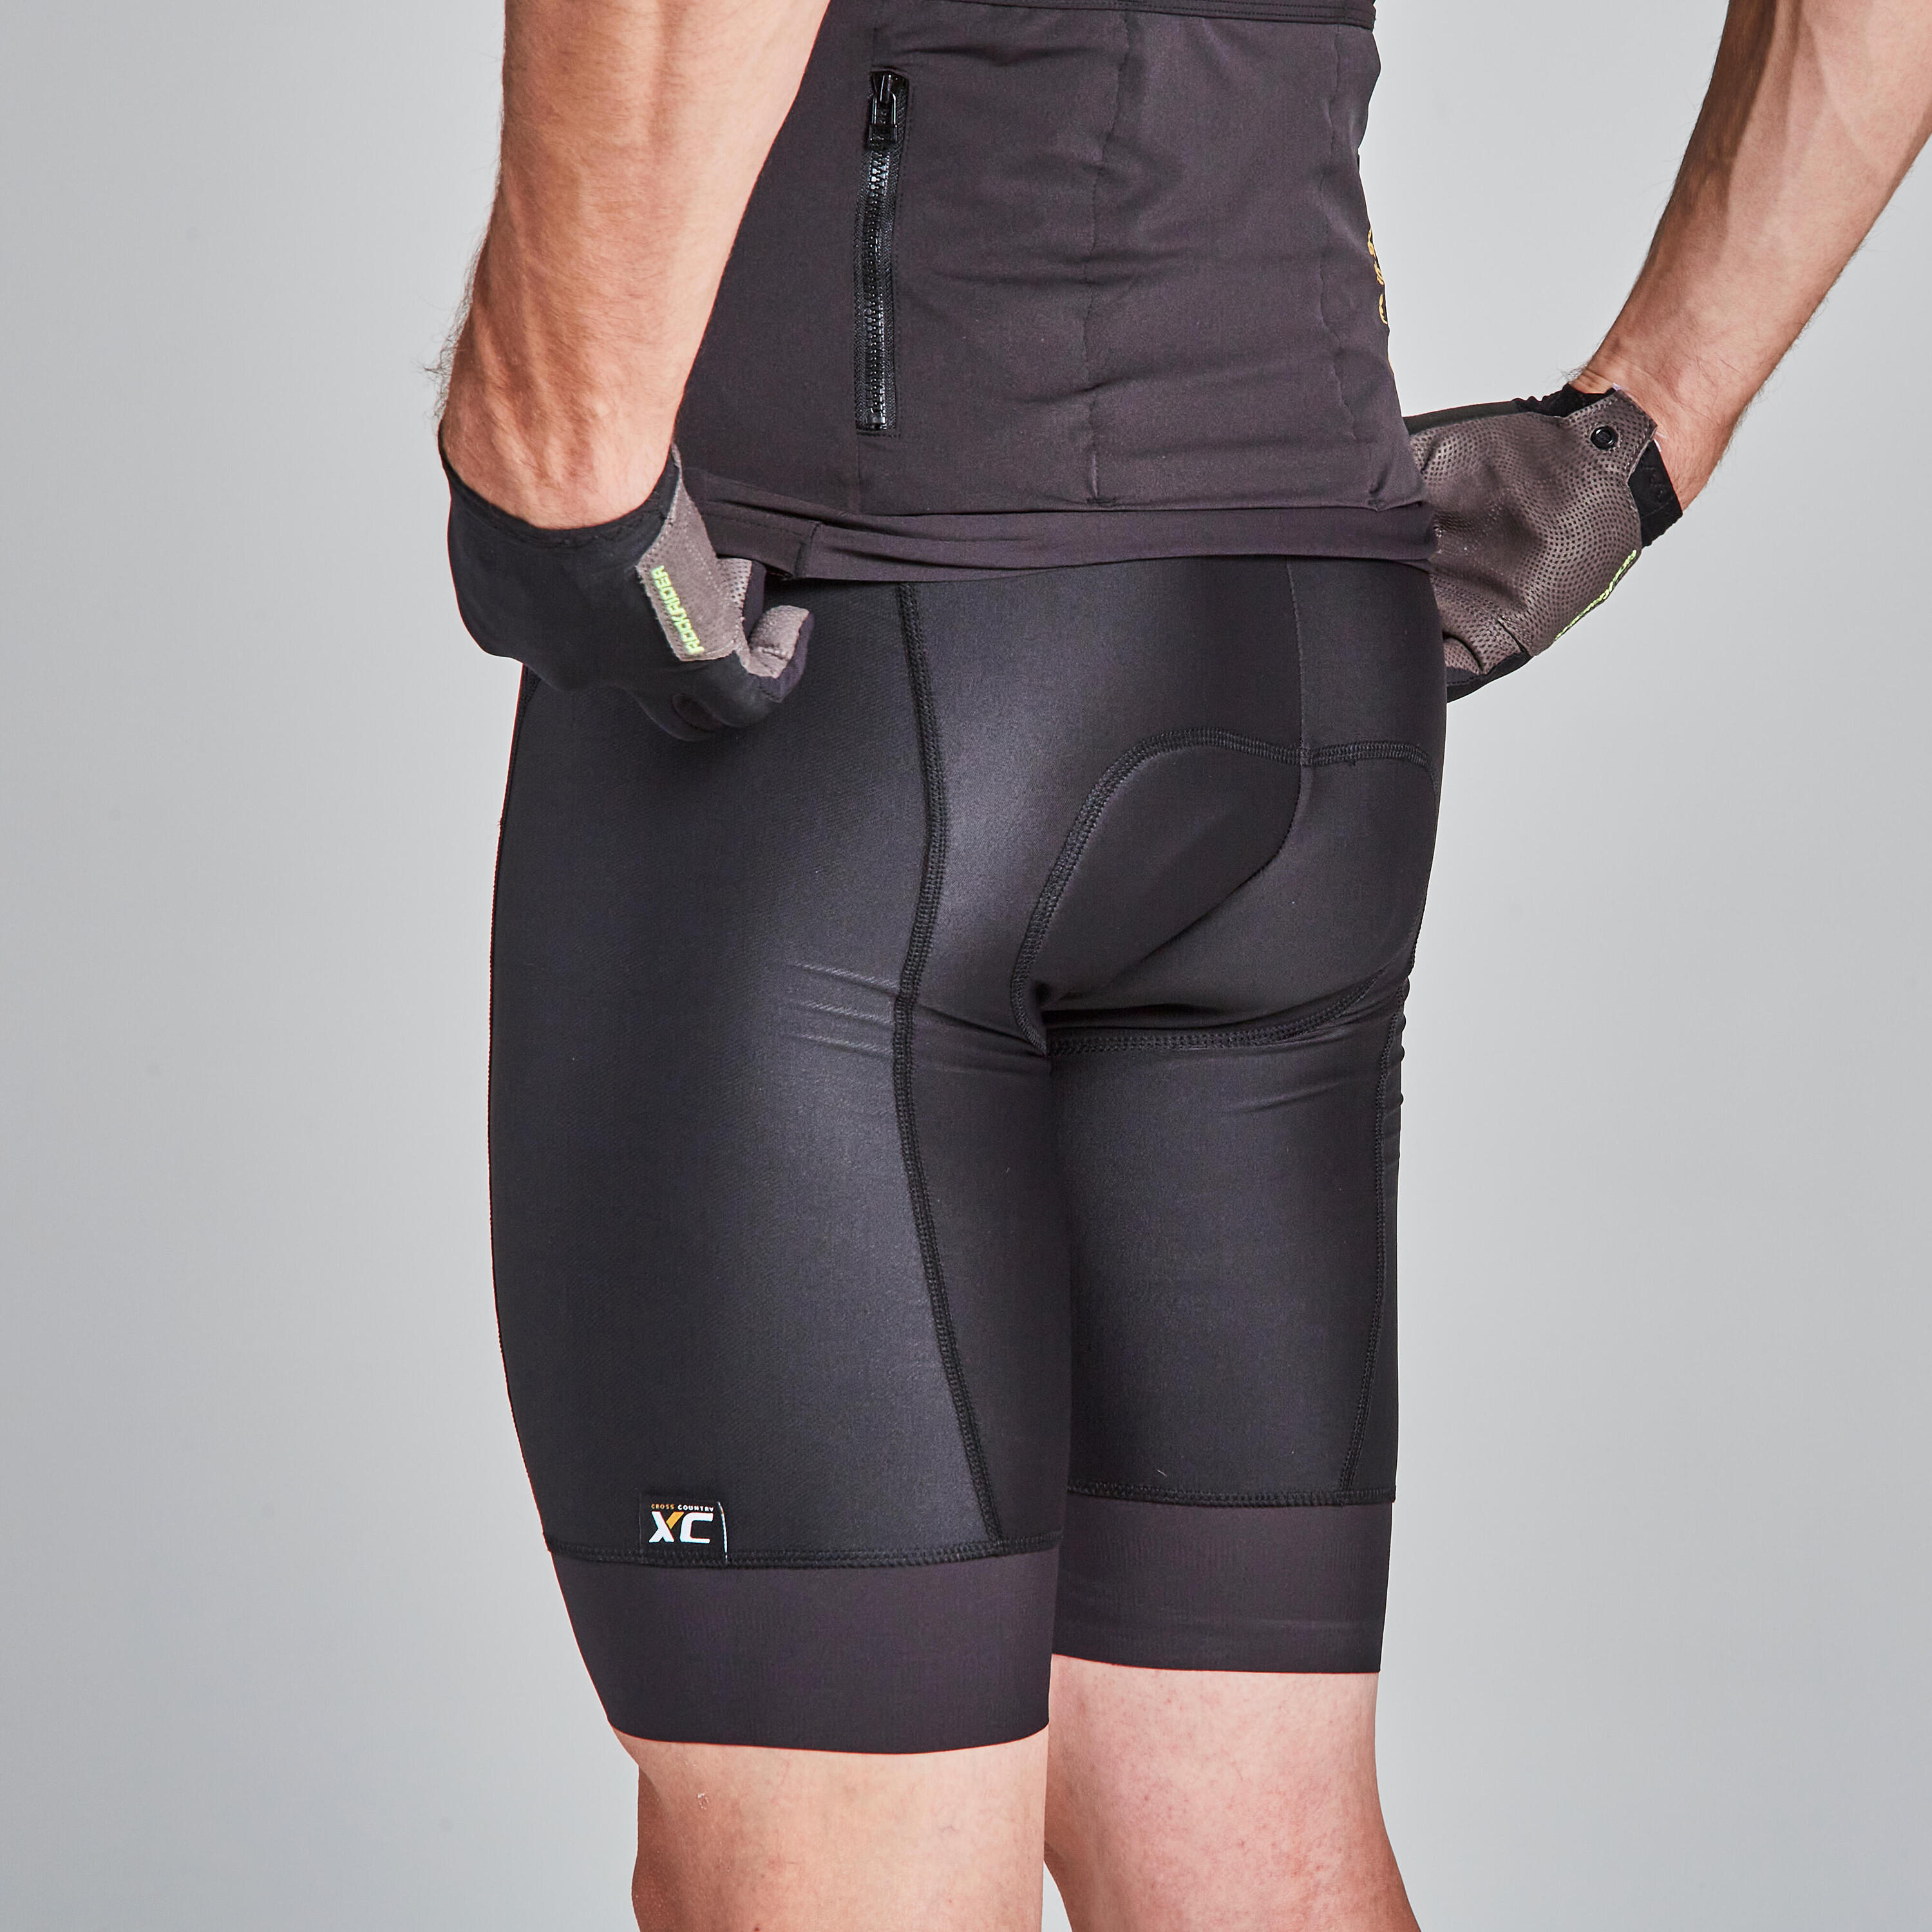 Mountain Bike Shorts XC Light - Ochre 15/16